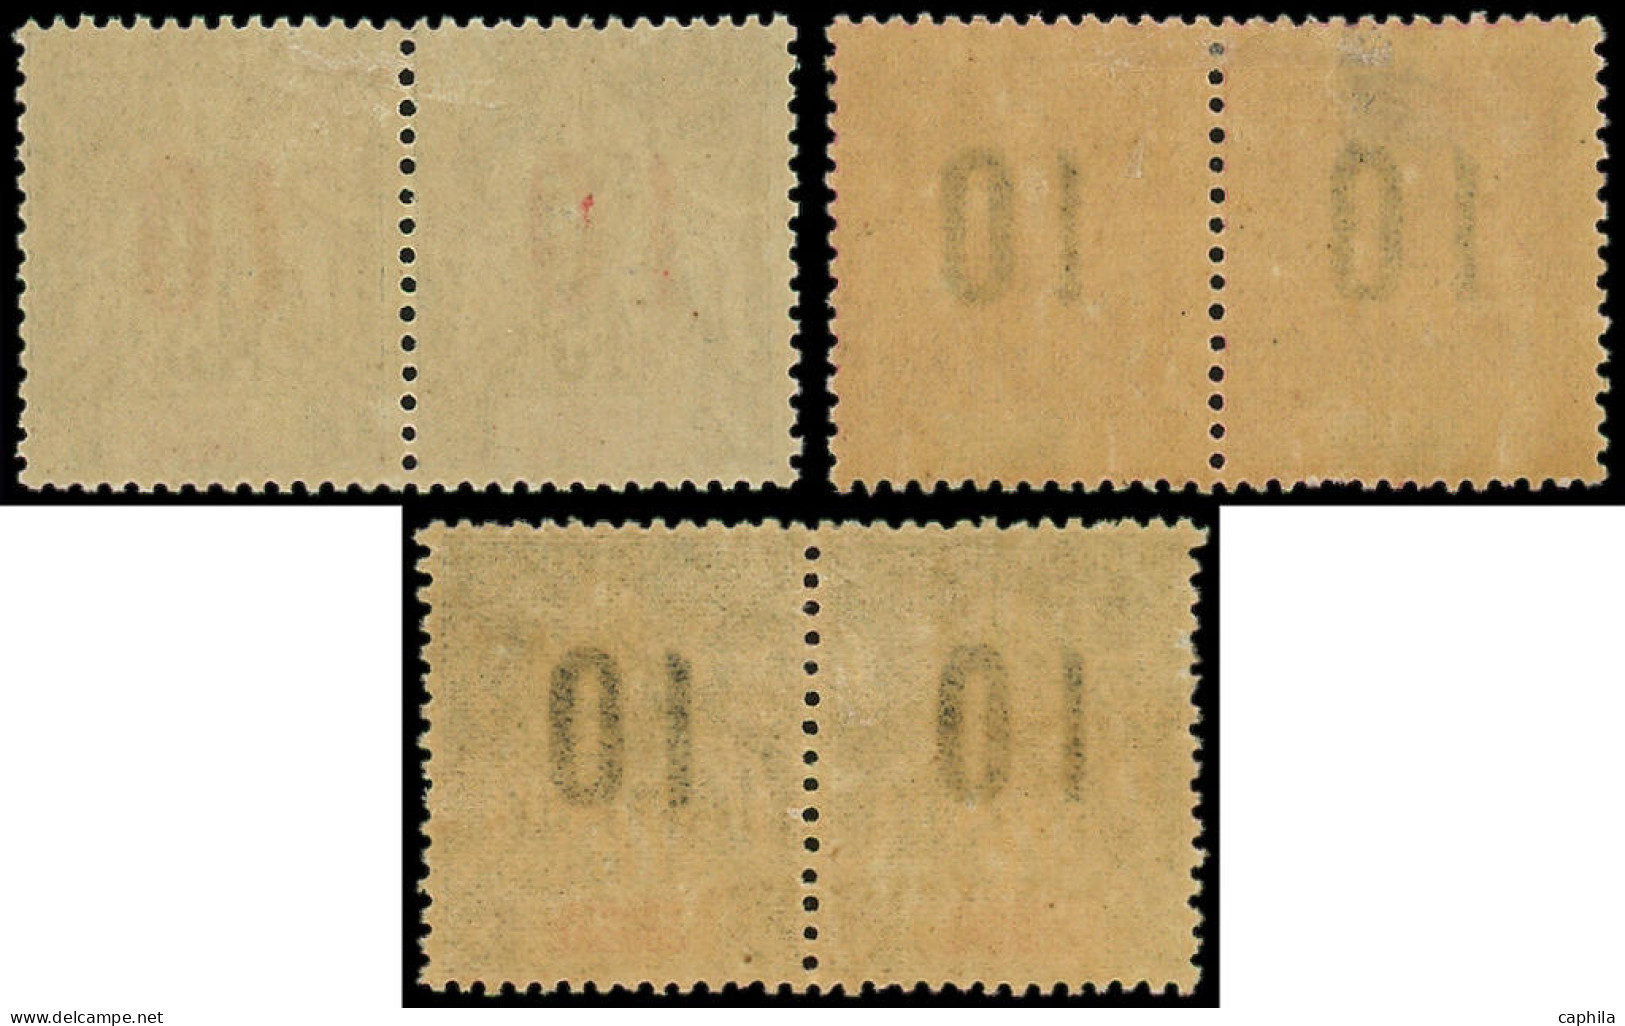 * GRANDE COMORE - Poste - 27Aa/29Aa, 3 Paires Chiffres Espacés Tenant à Normal - Unused Stamps